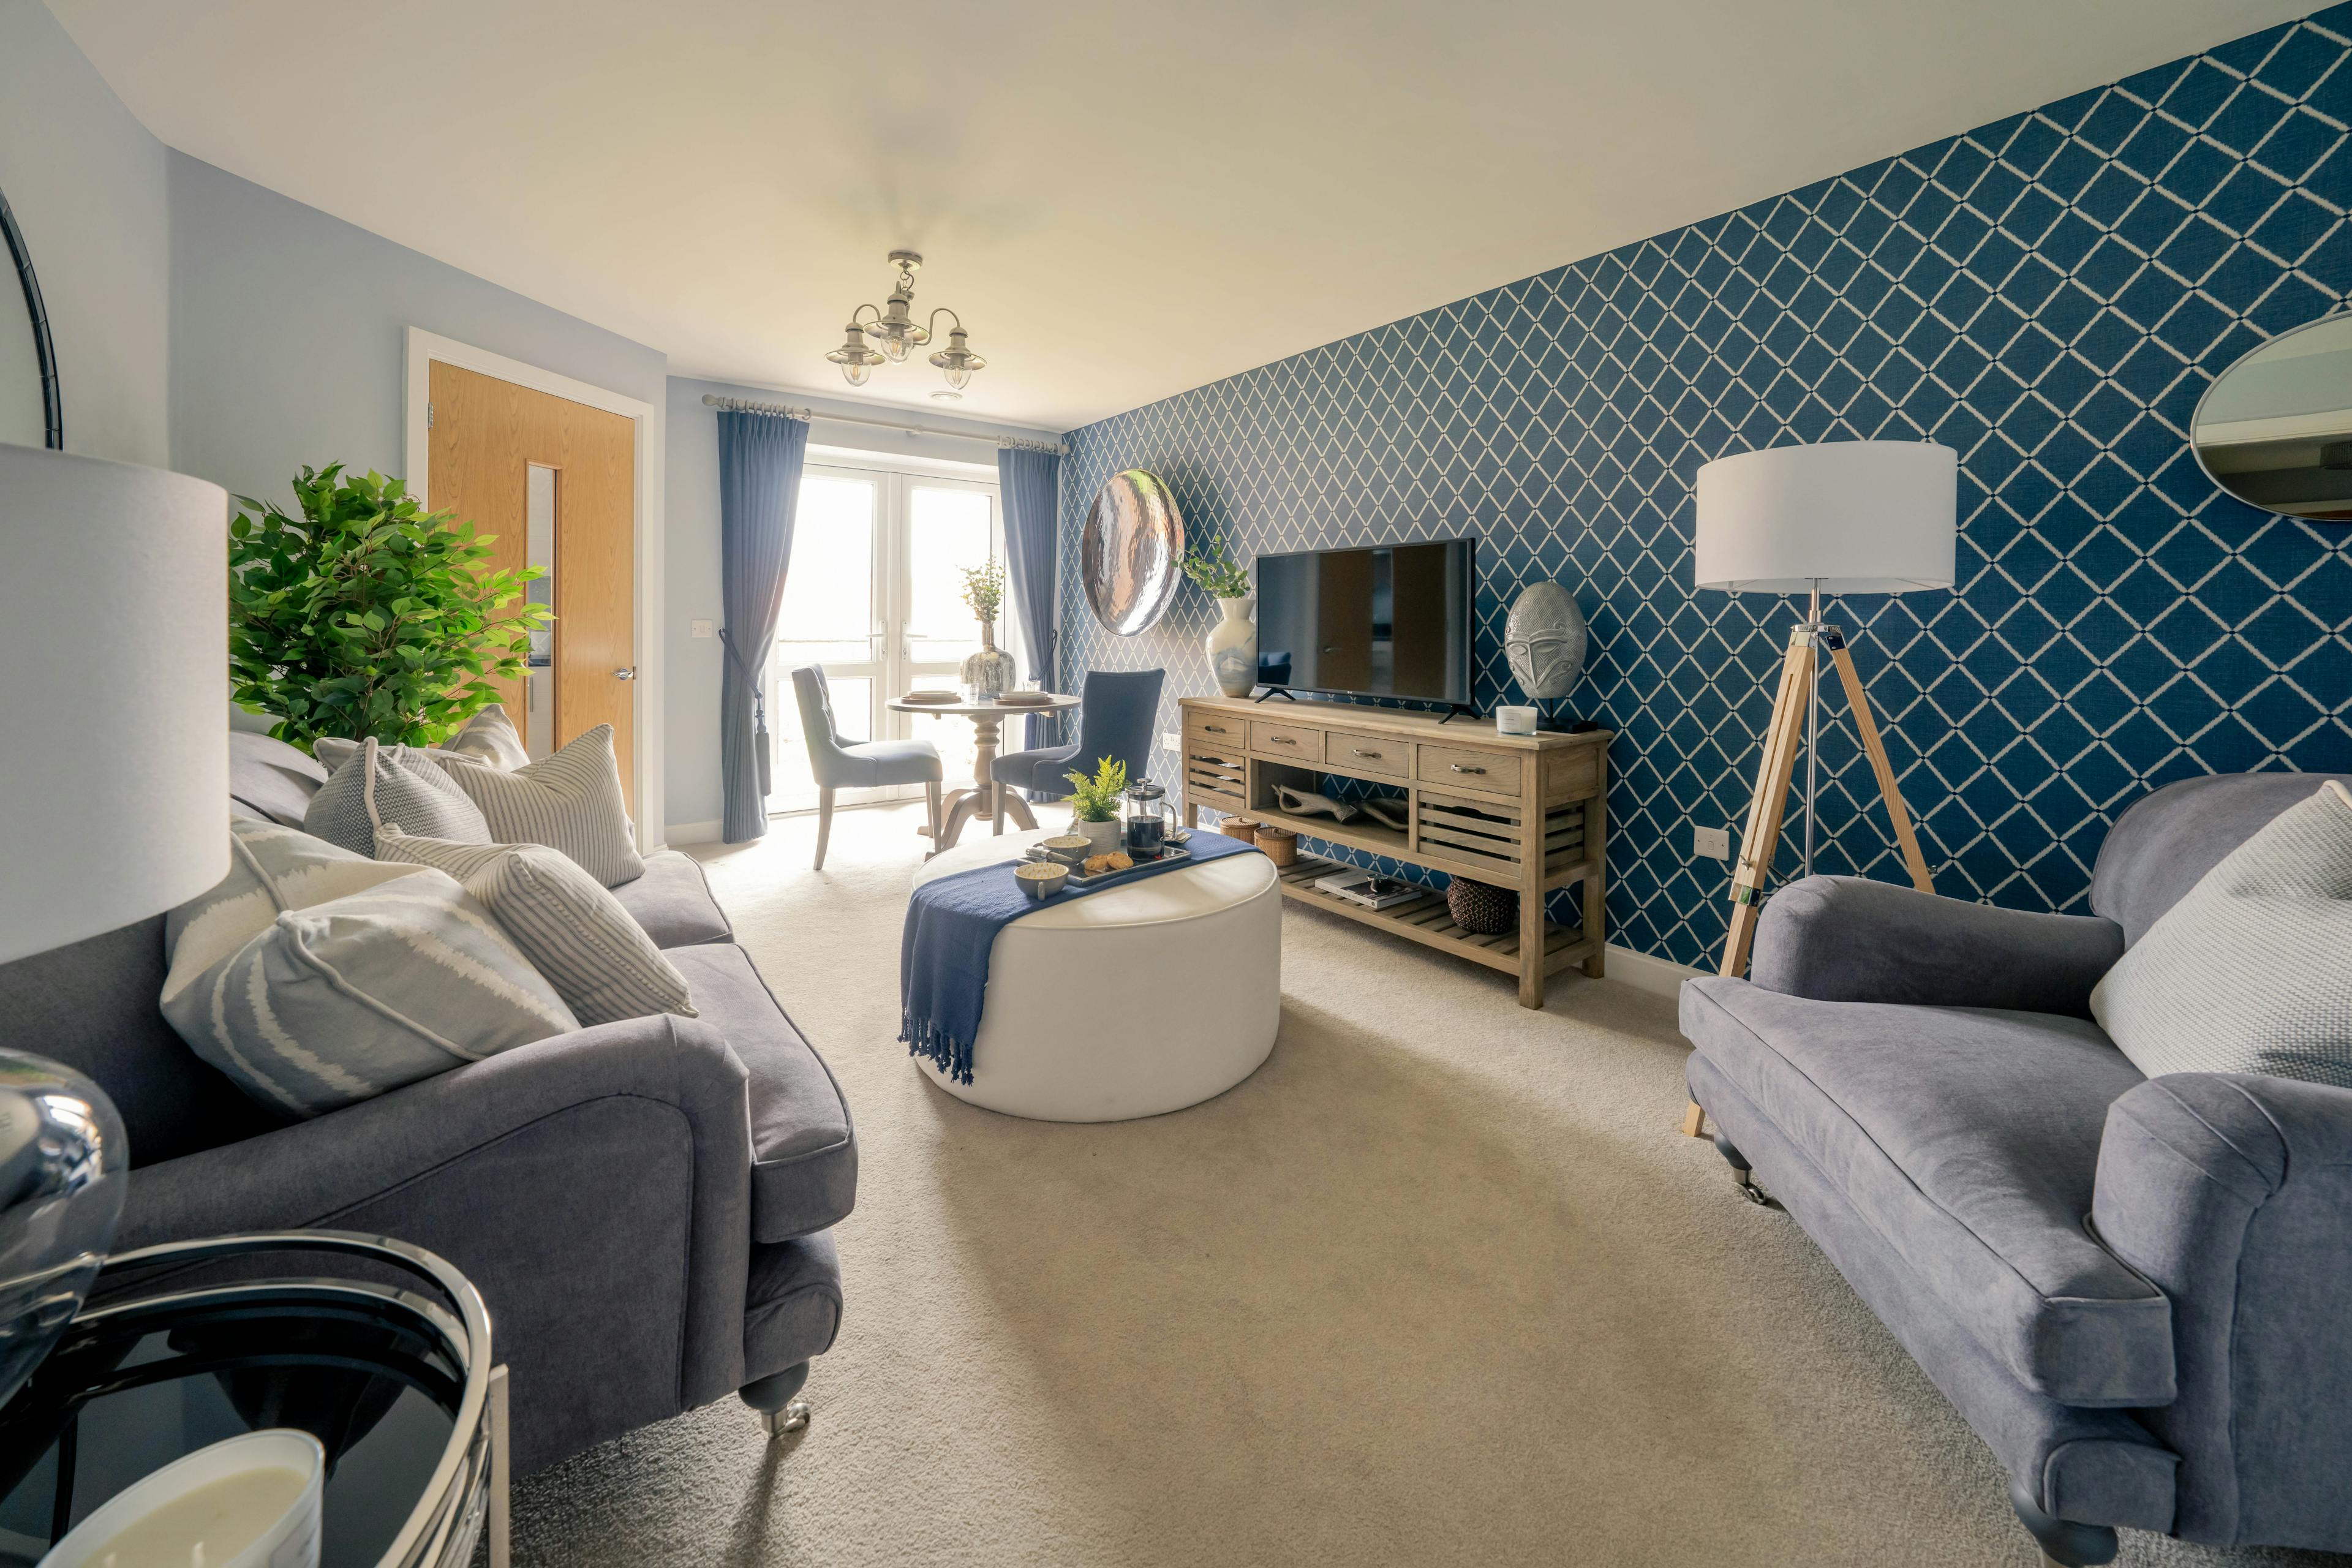 Living Room at Horizons Retirement Development in Poole, Dorset